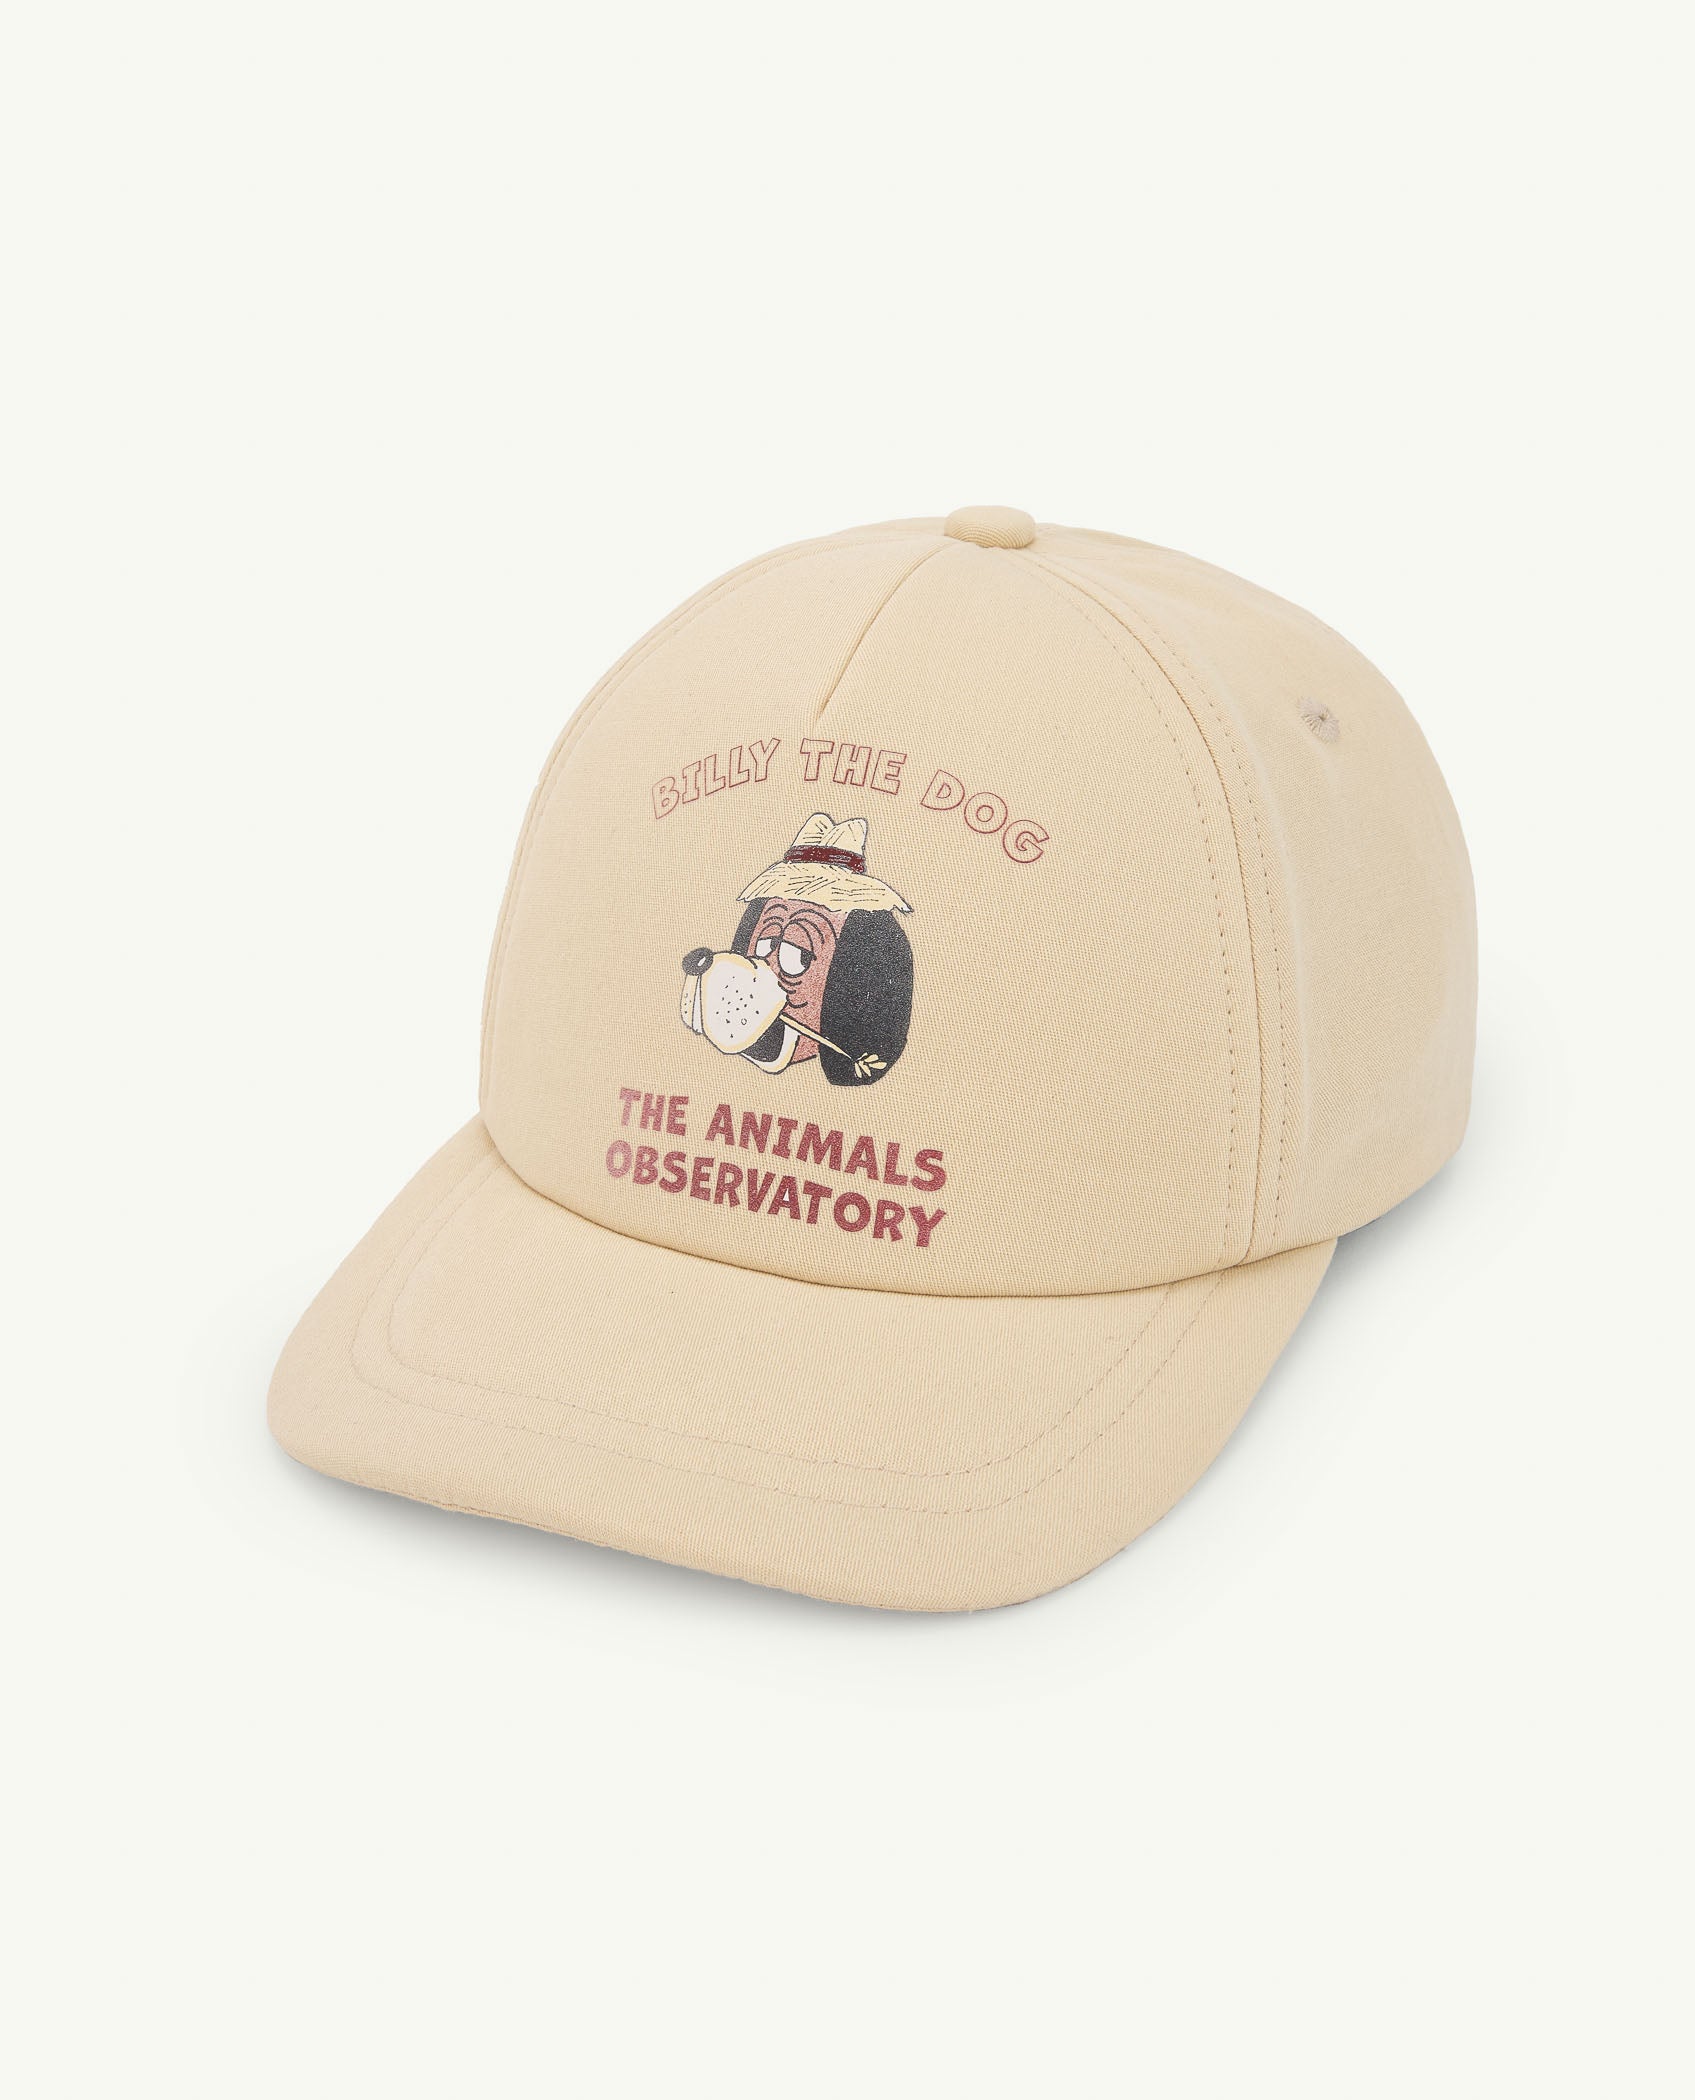 The animals observatory - hamster kids cap